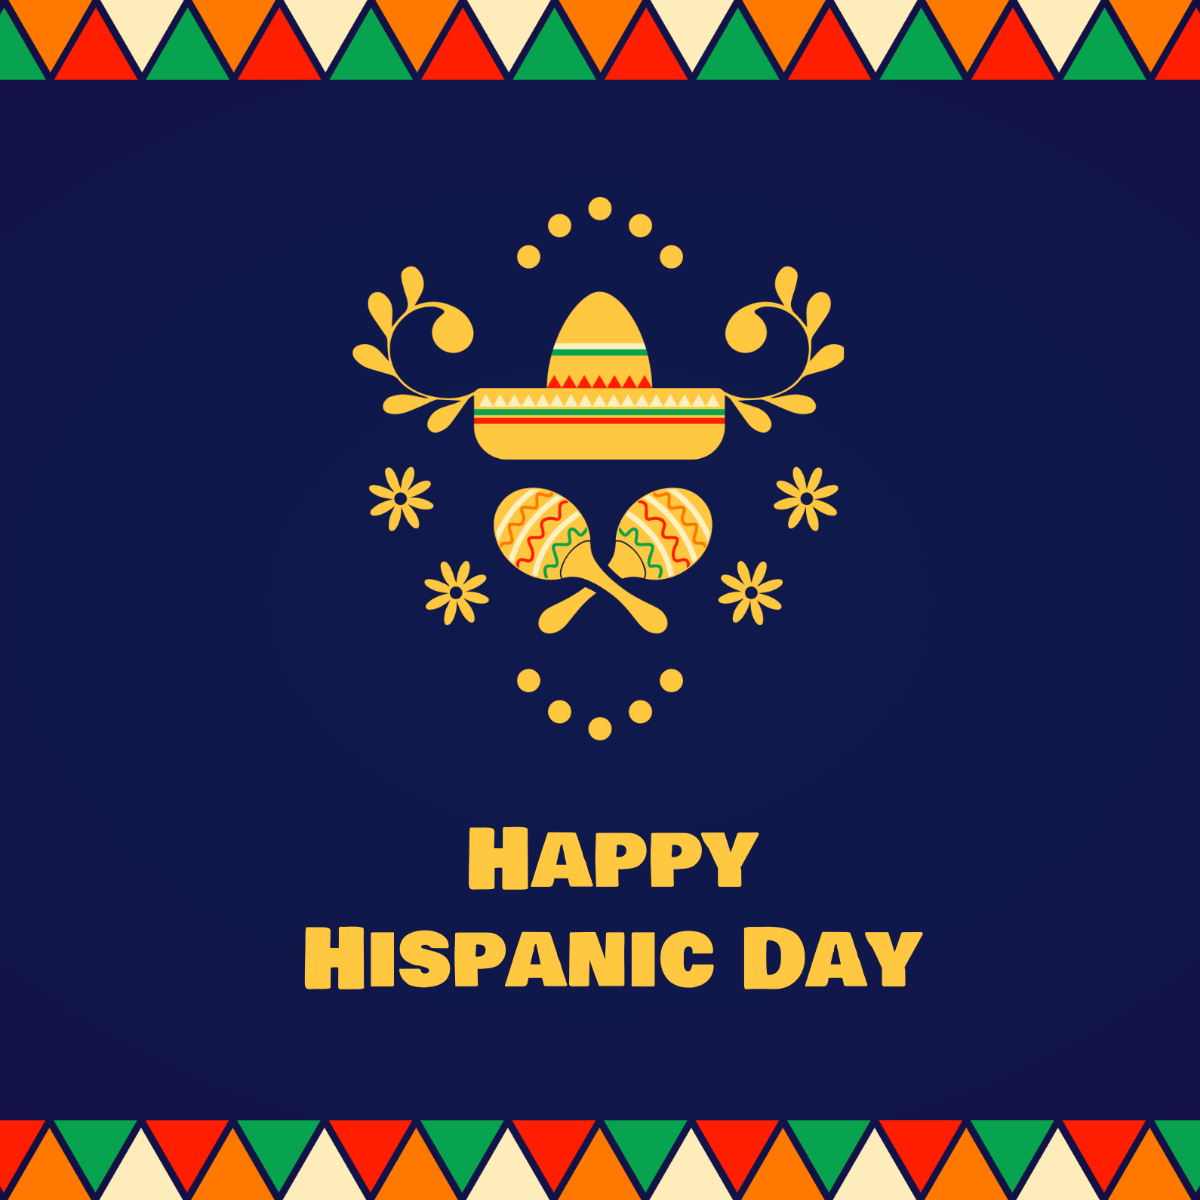 Free Hispanic Day LinkedIn Post Template